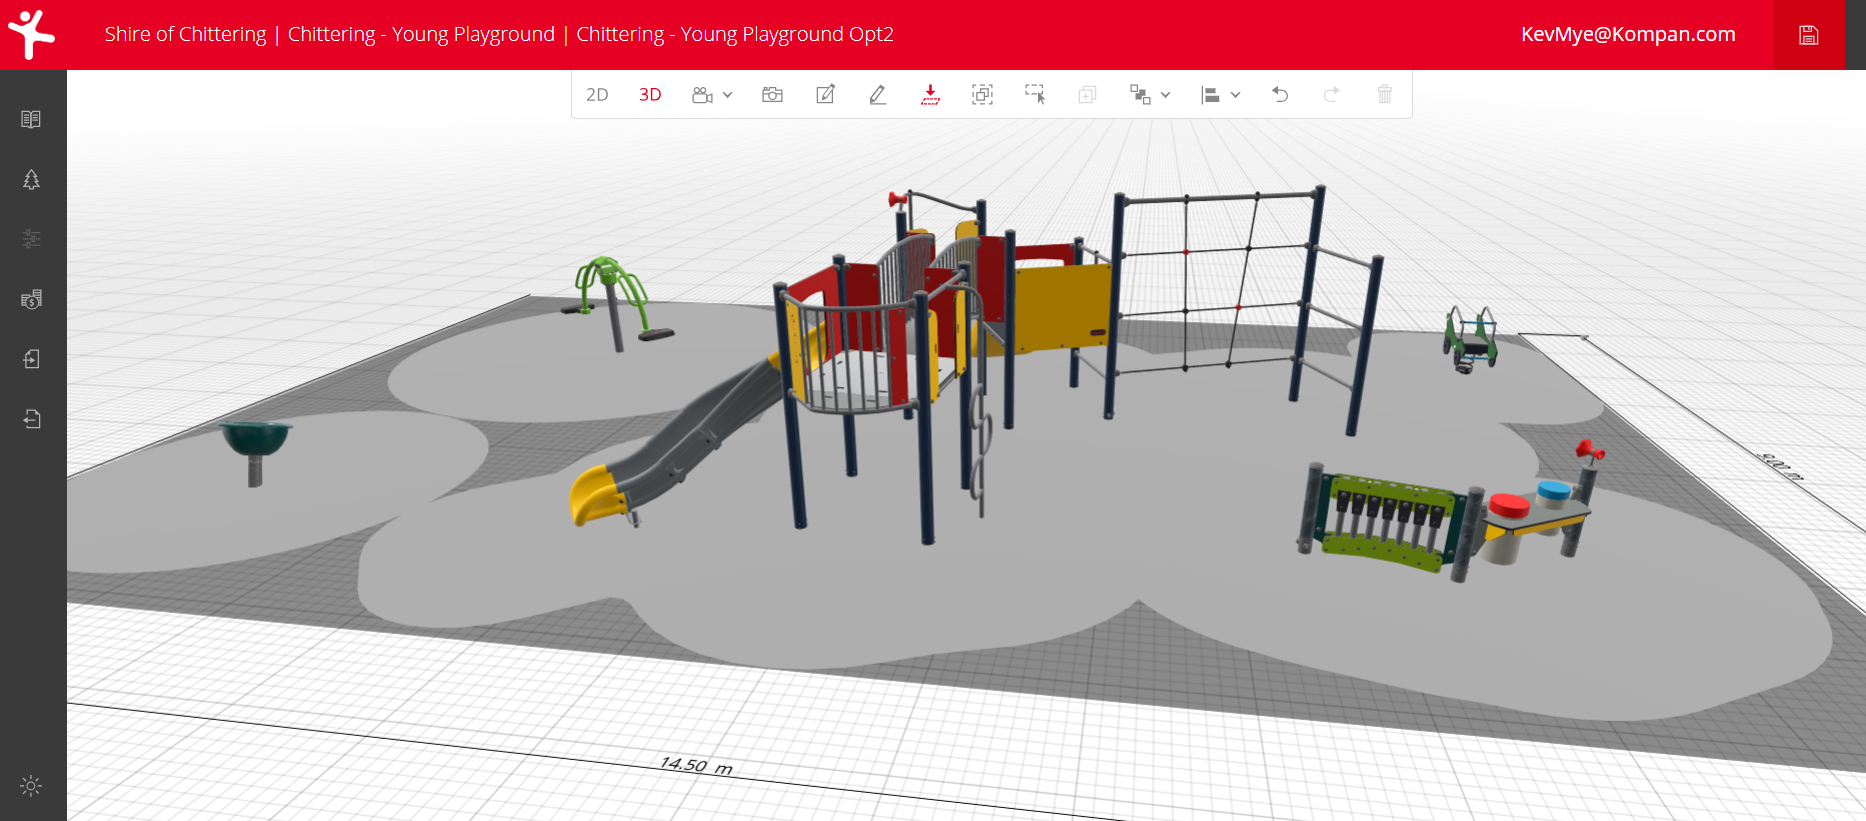 Mu;chea Rec Centre Playground - Design Feedback